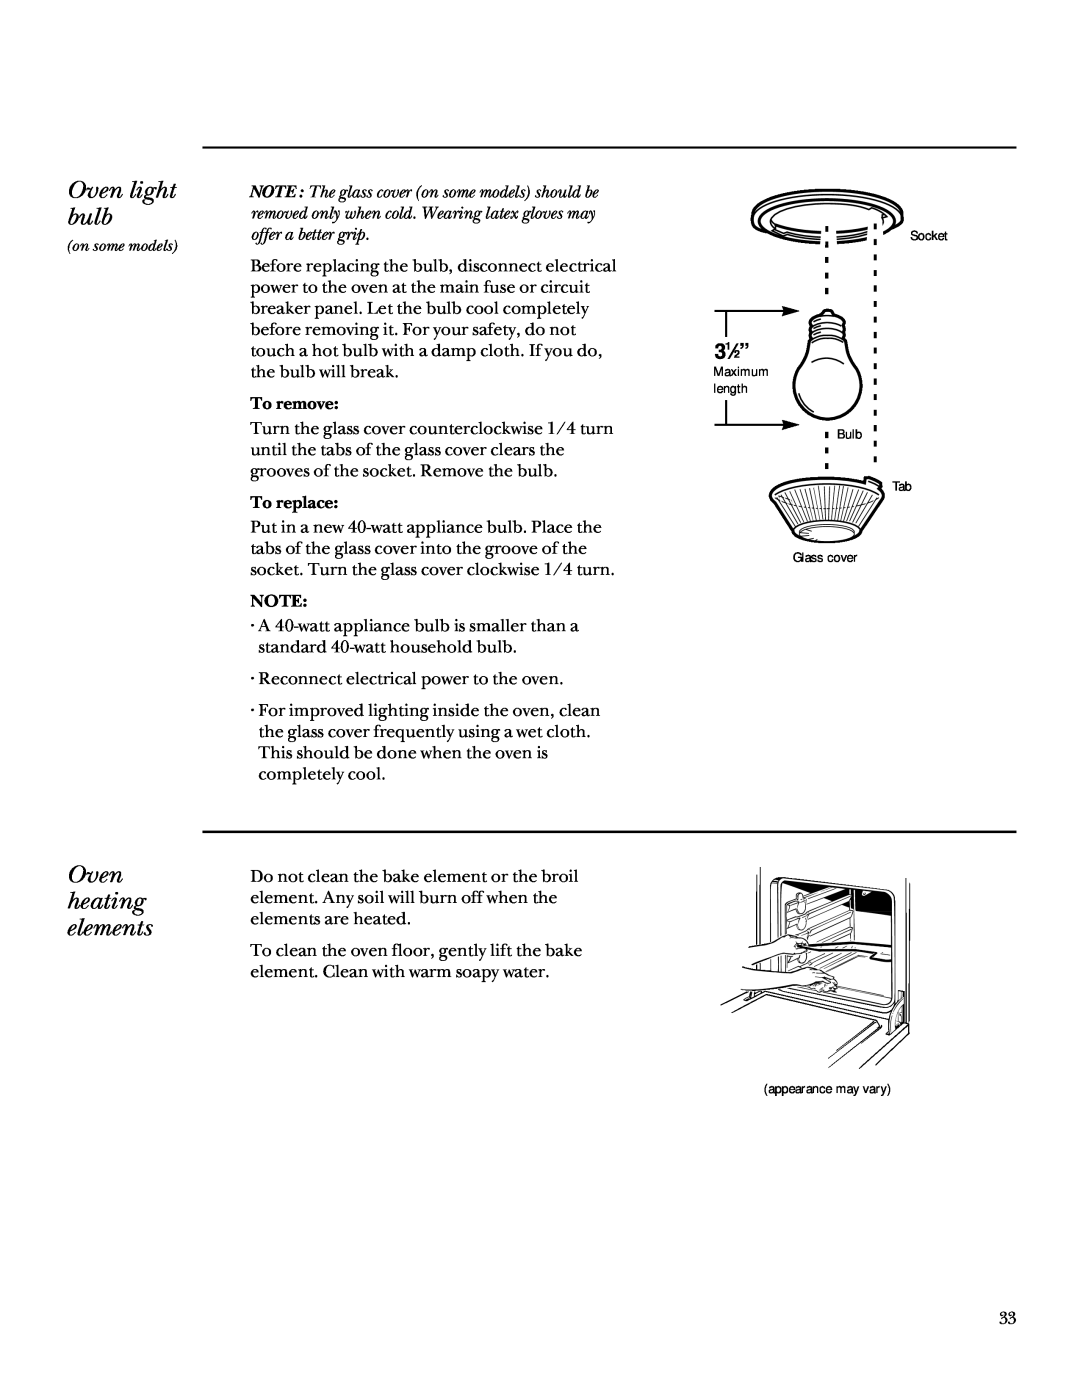 GE 164D3333P095 manual Oven heating elements, Oven light bulb, 31⁄2”, Socket, Maximum length Bulb Tab Glass cover 